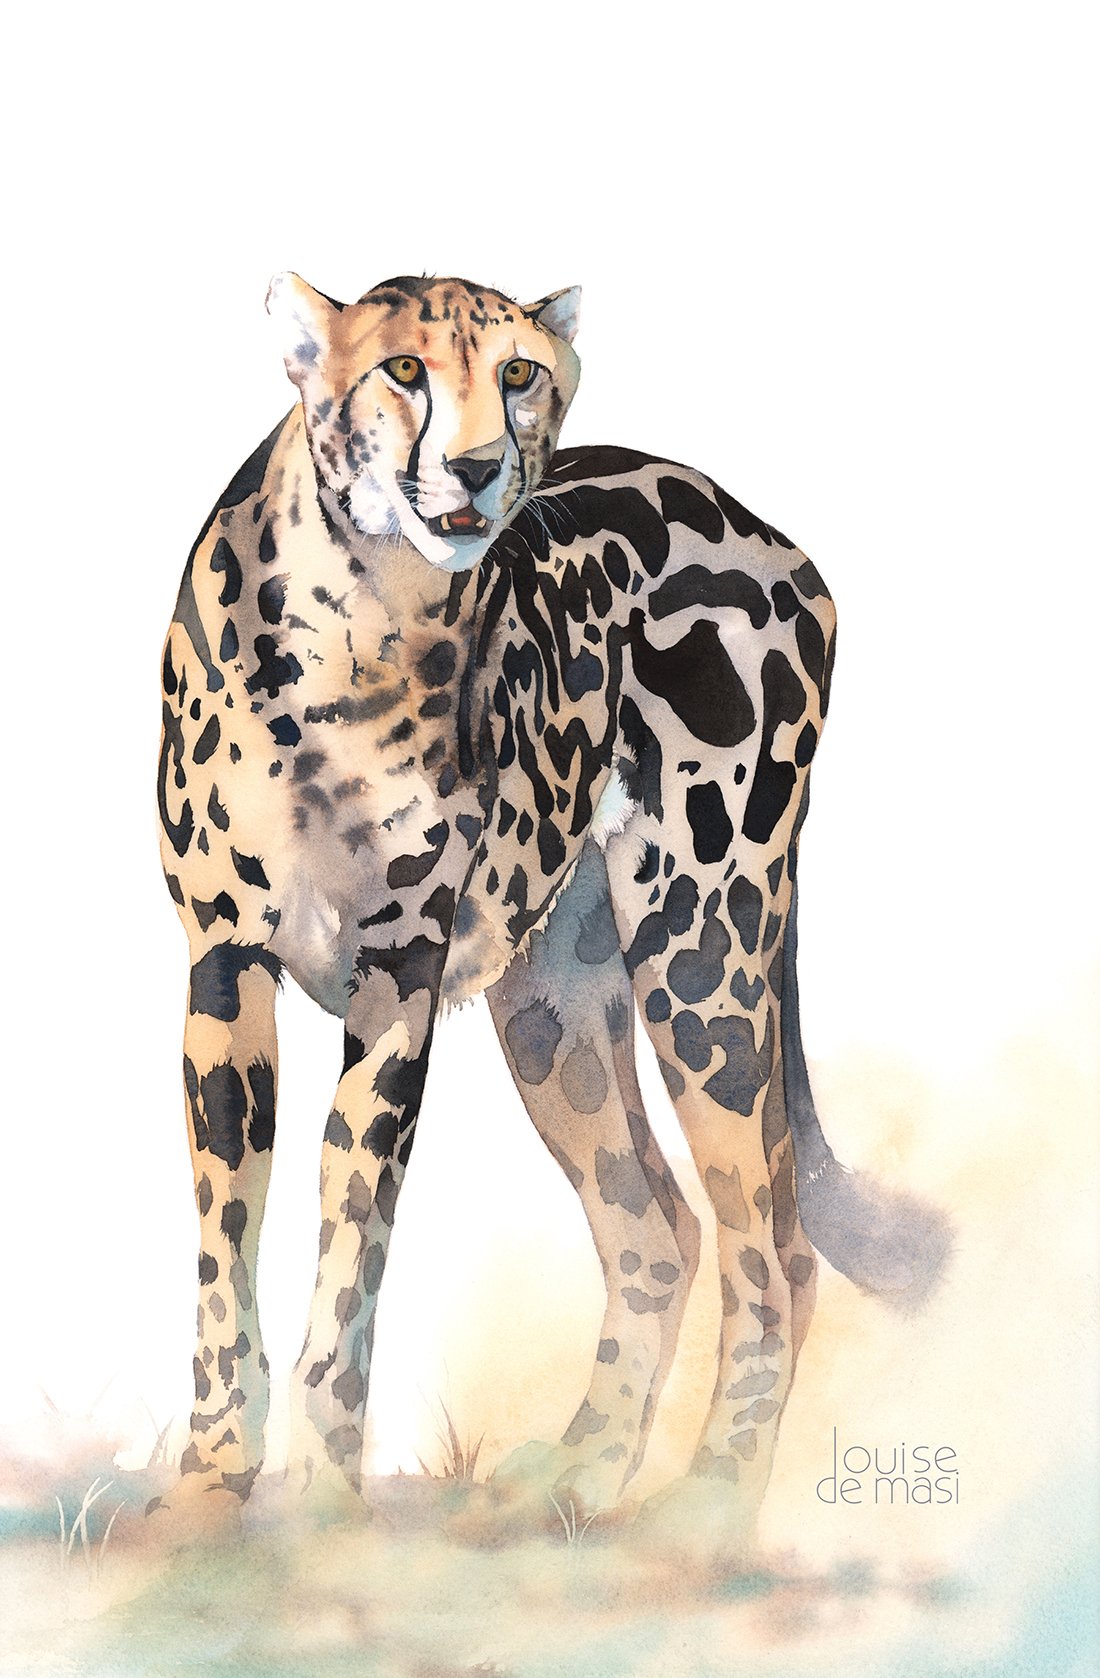 Cheetah - intermediate to advanced